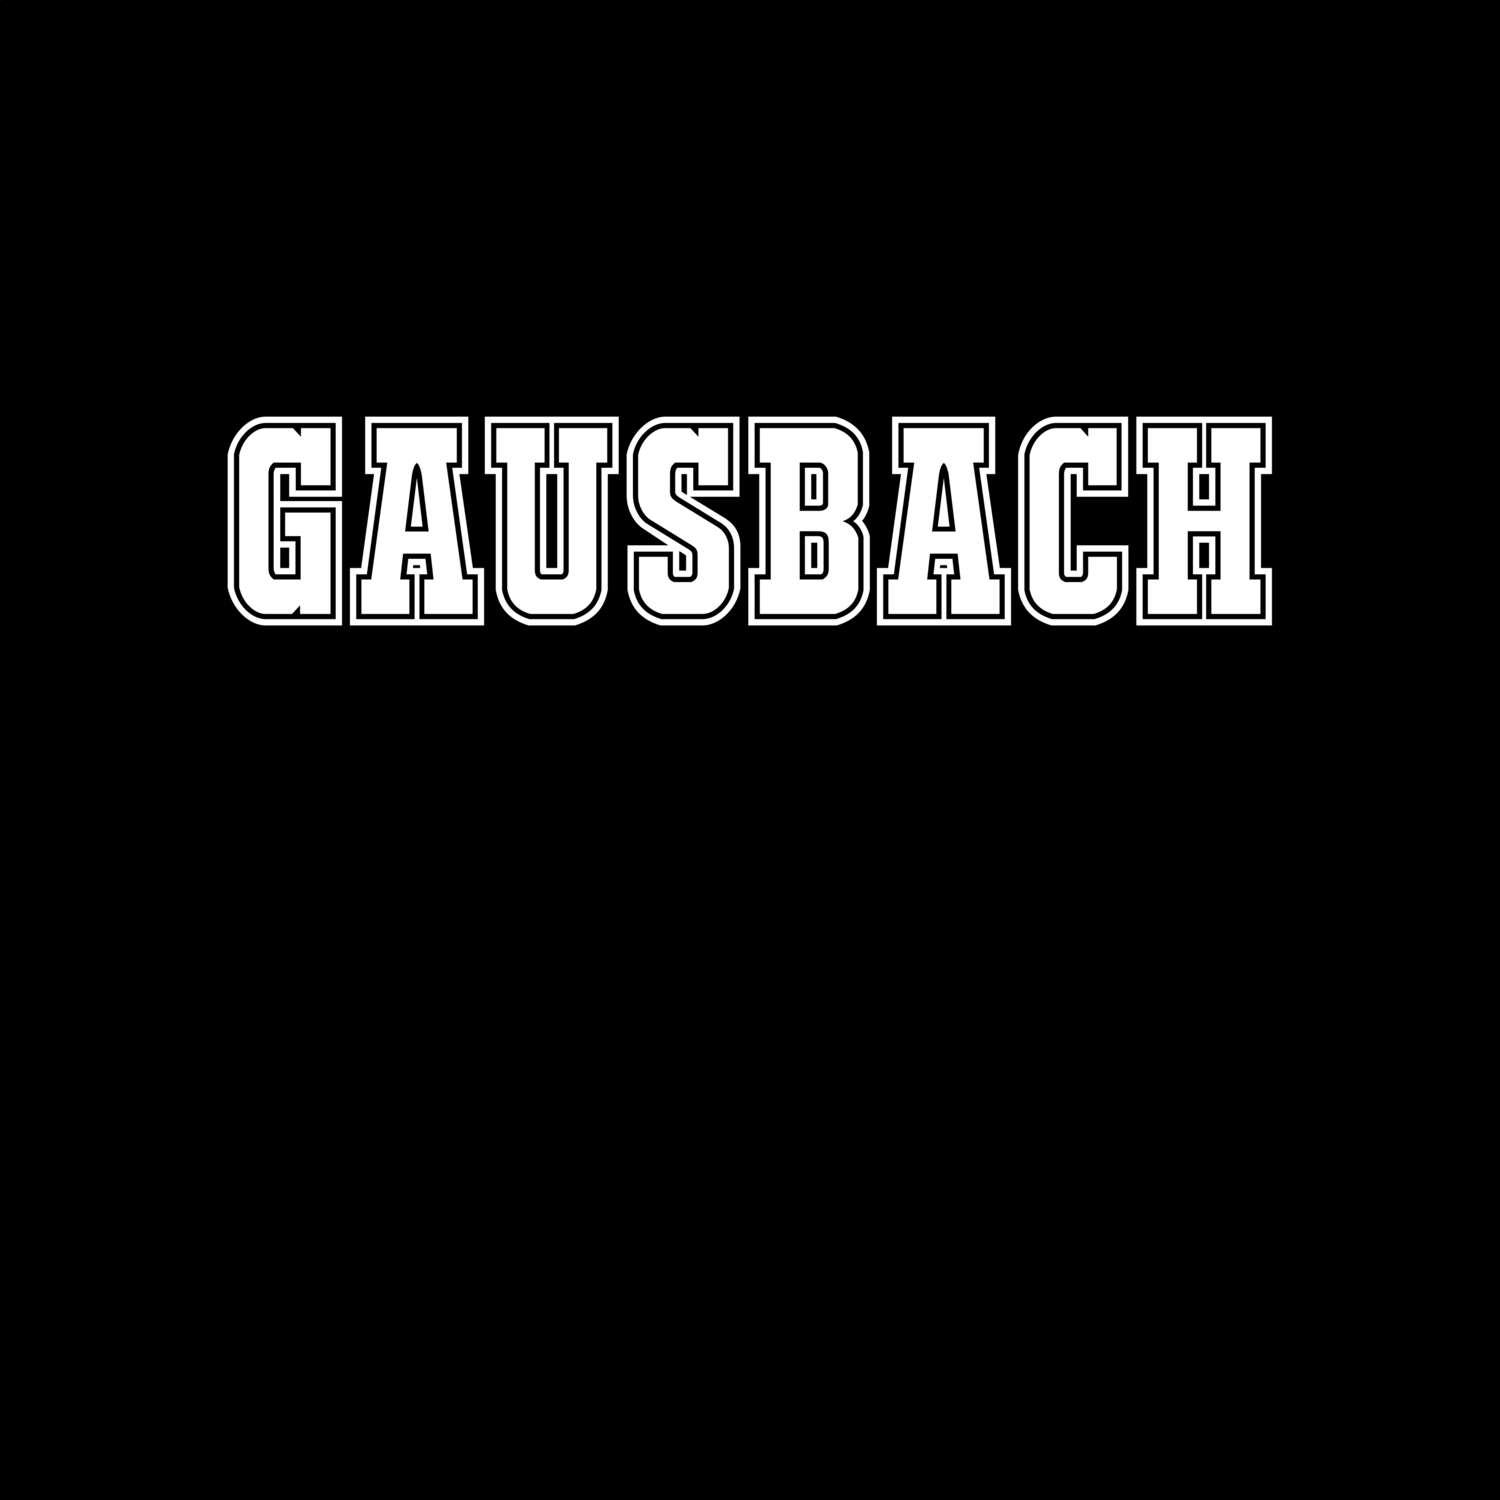 Gausbach T-Shirt »Classic«